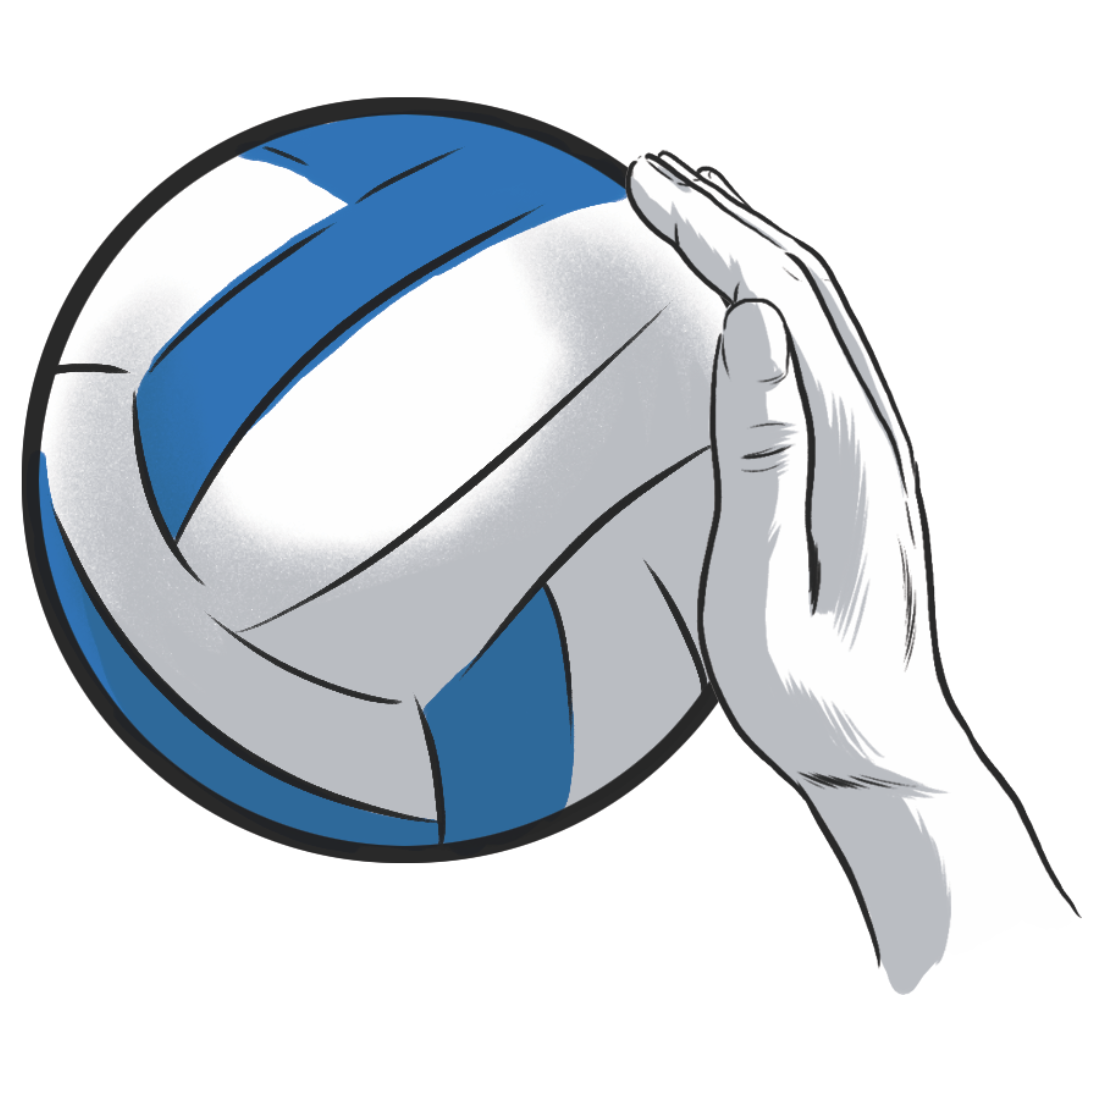 Volleyball serve